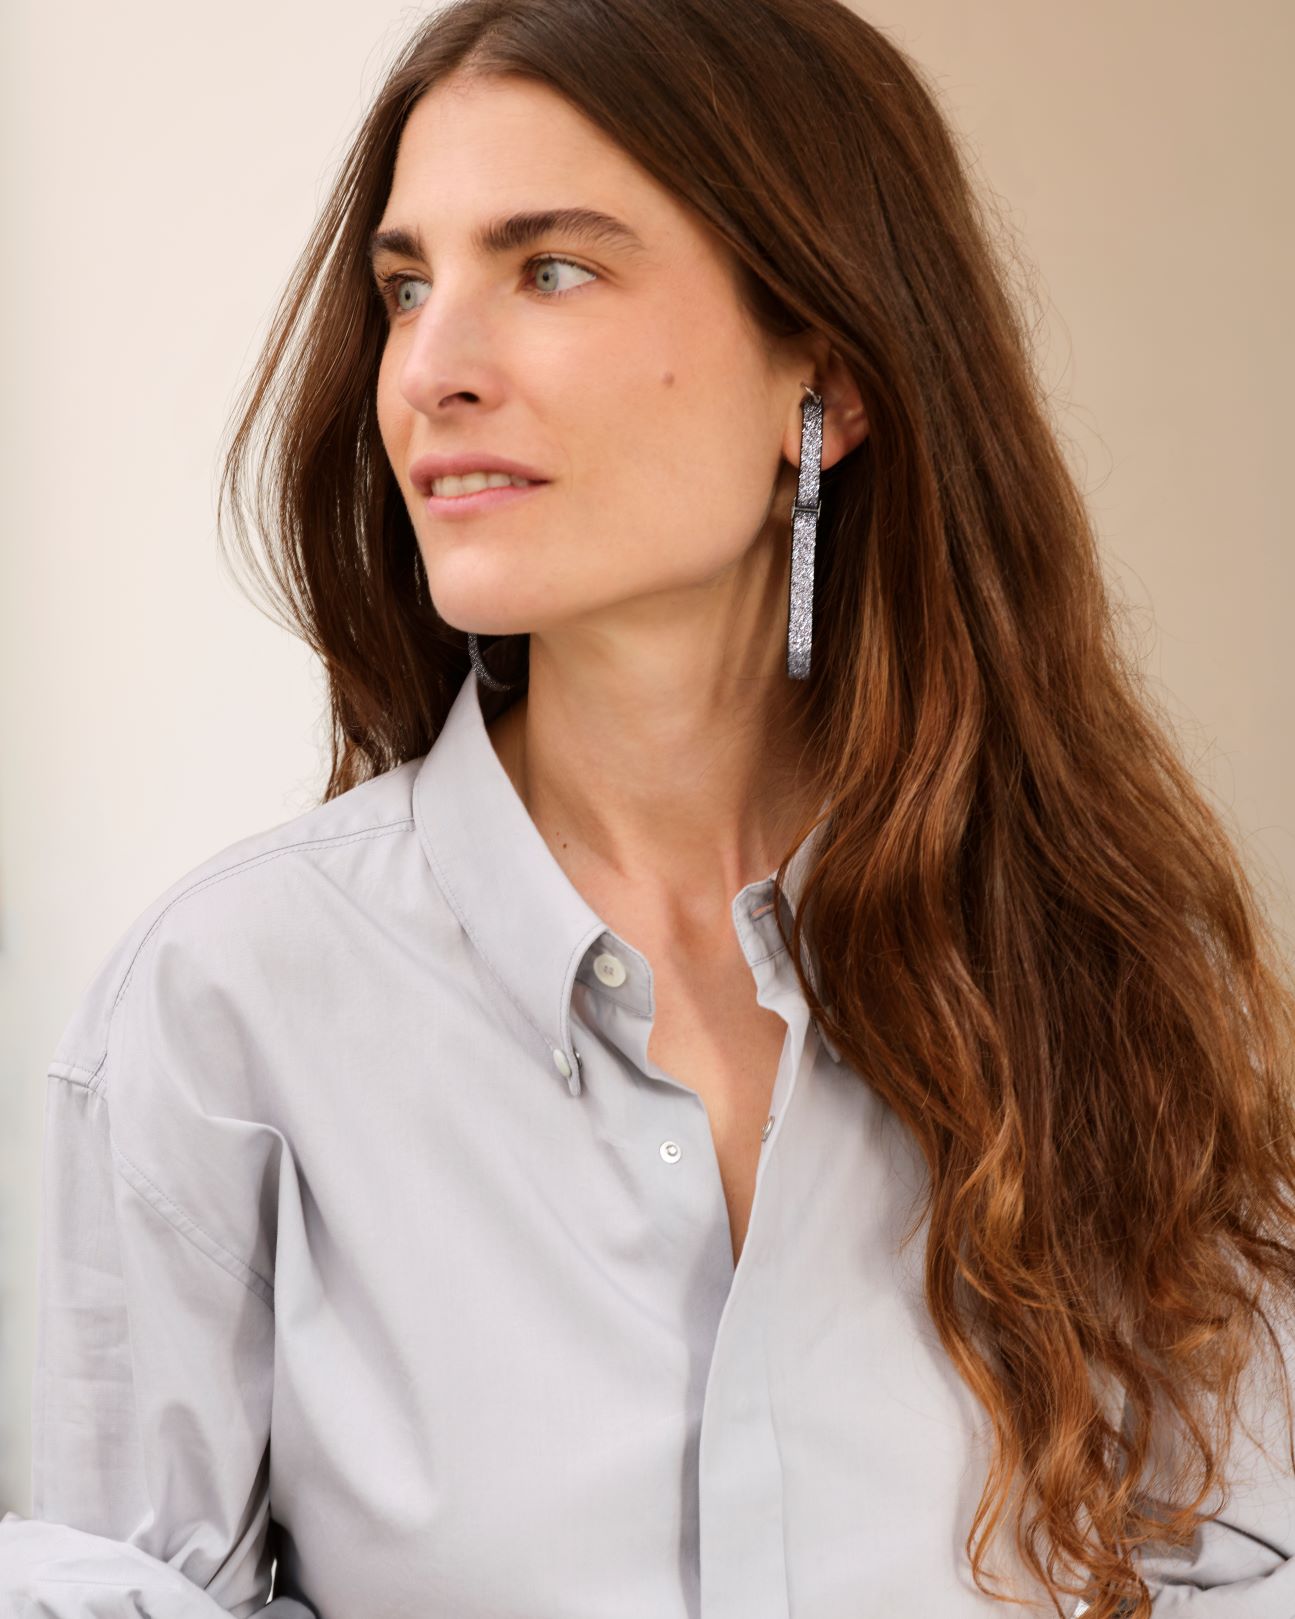 Maria Sole Ferragamo wears the Sei Earrings in Gunmetal Leather. Image Courtesy of So-Le Studio